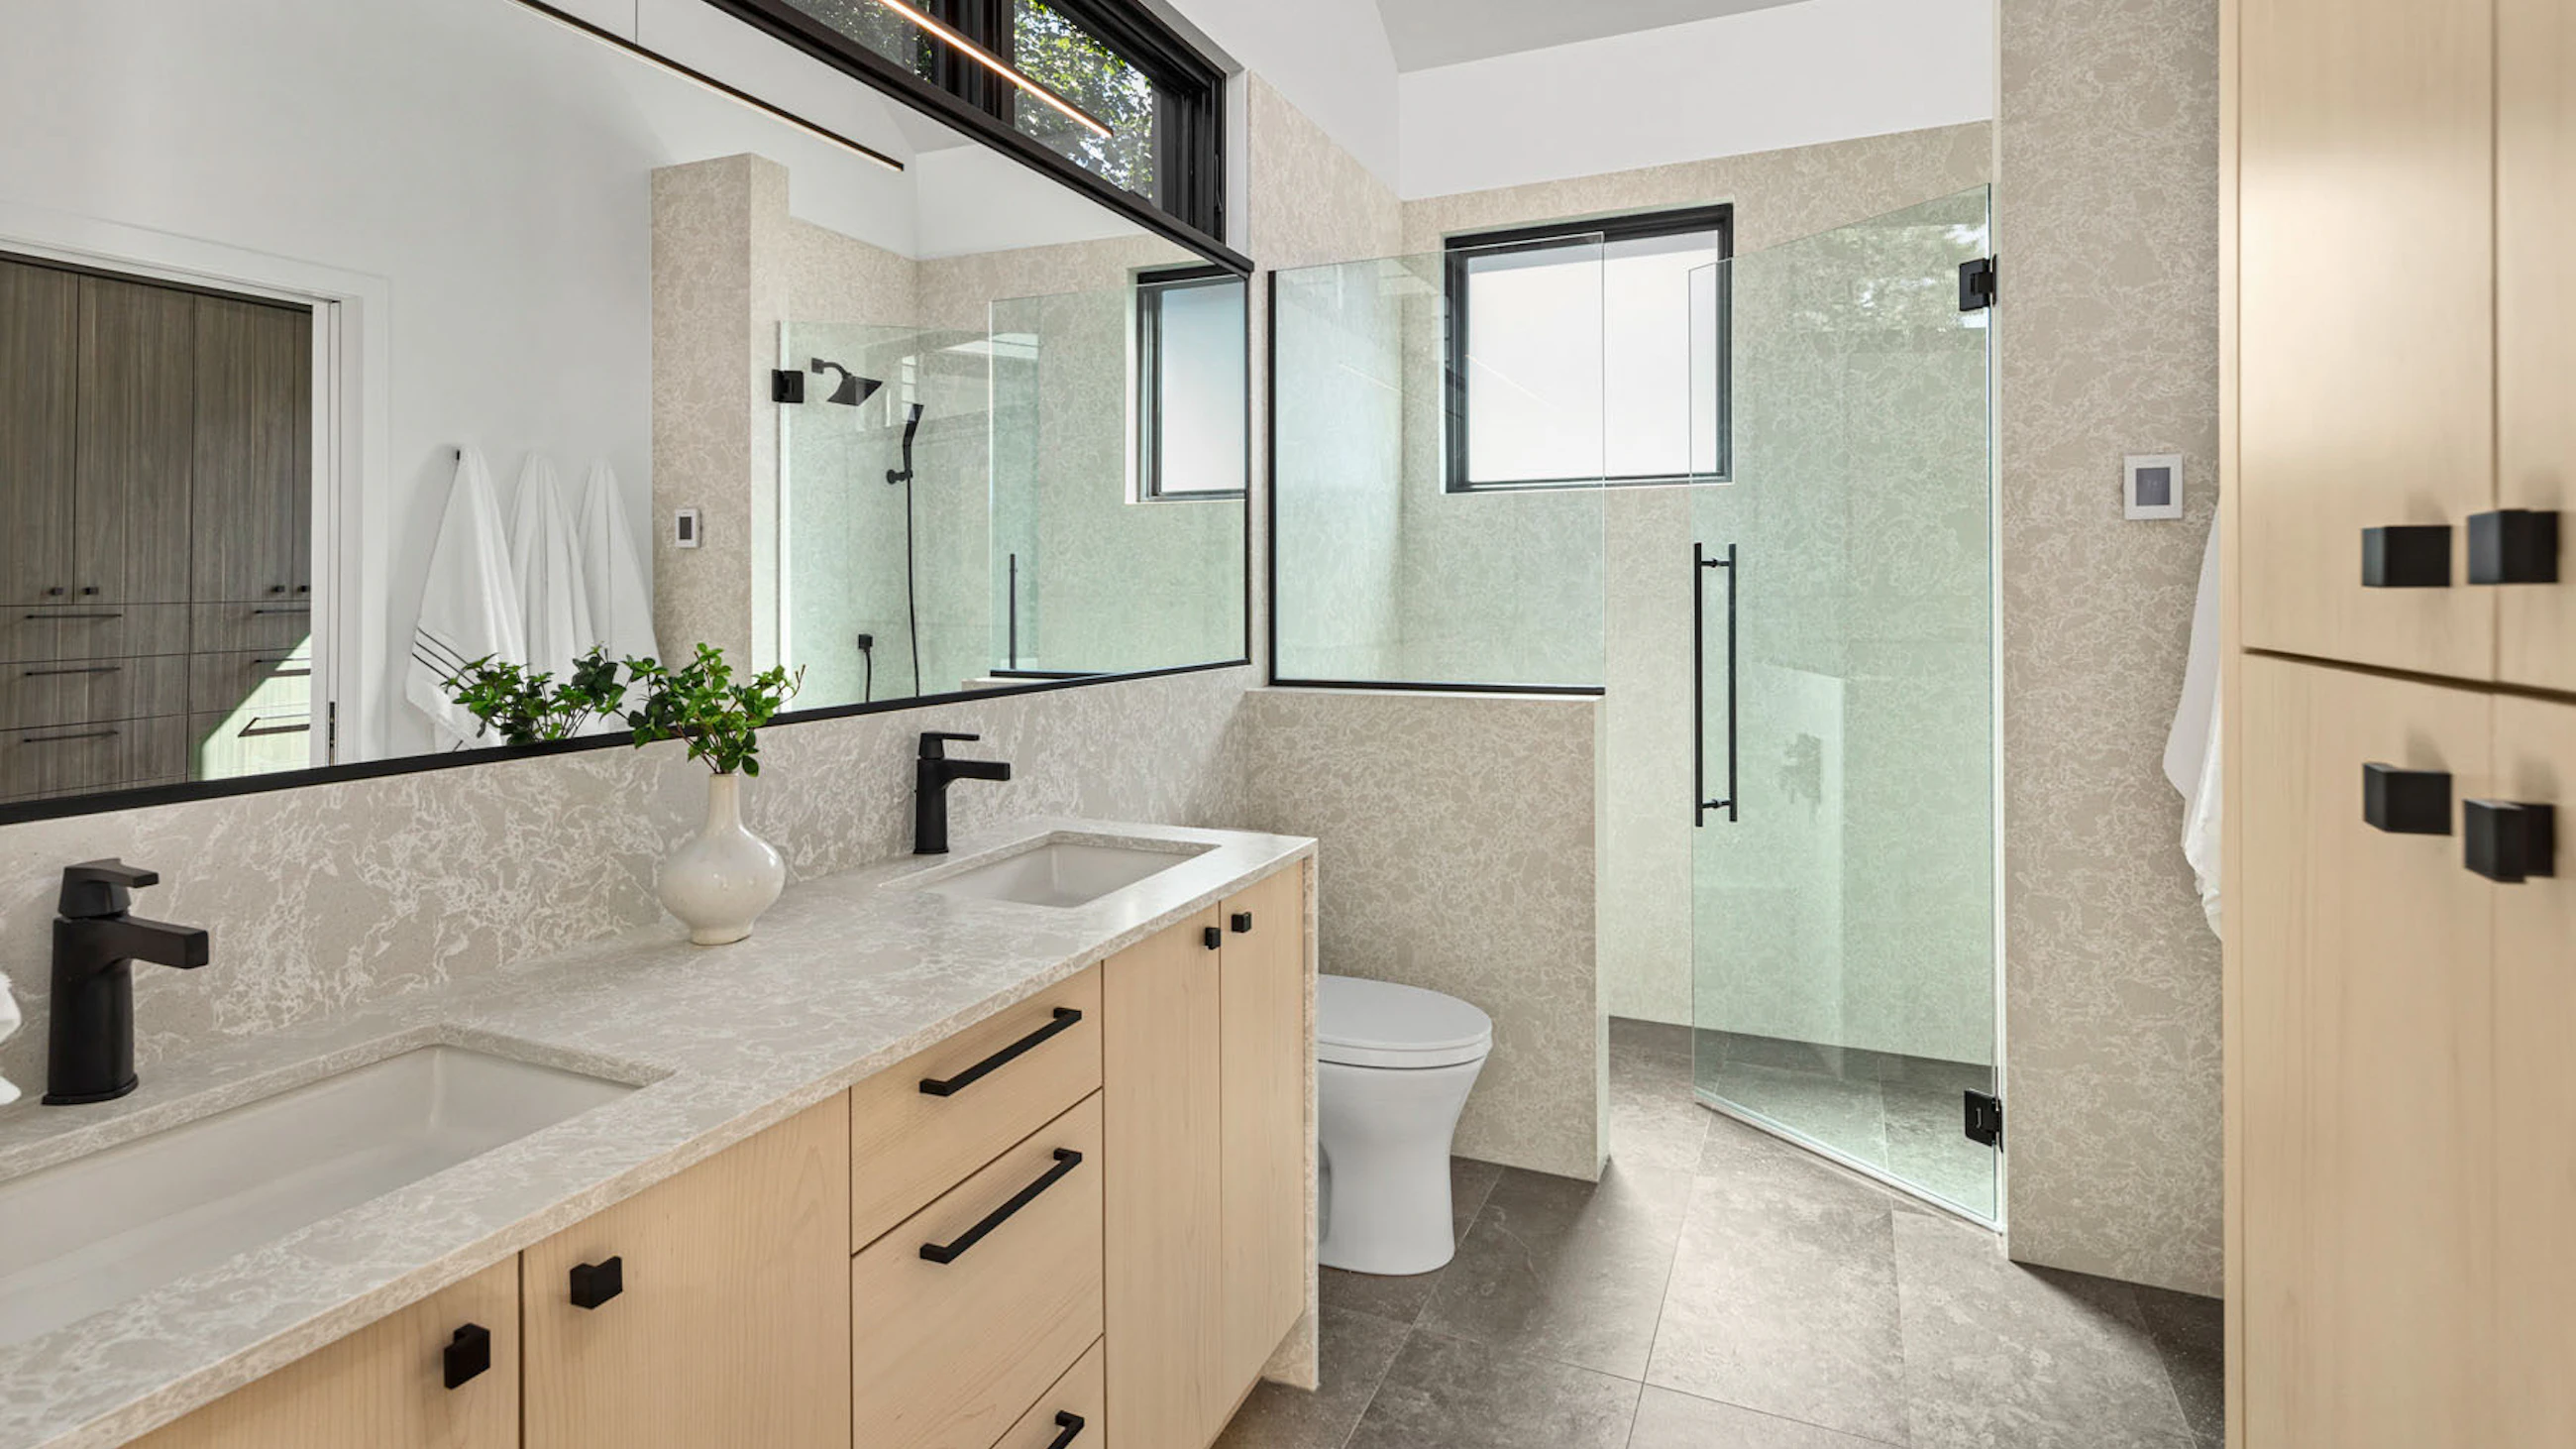 Master shower features a zero entry tile floor